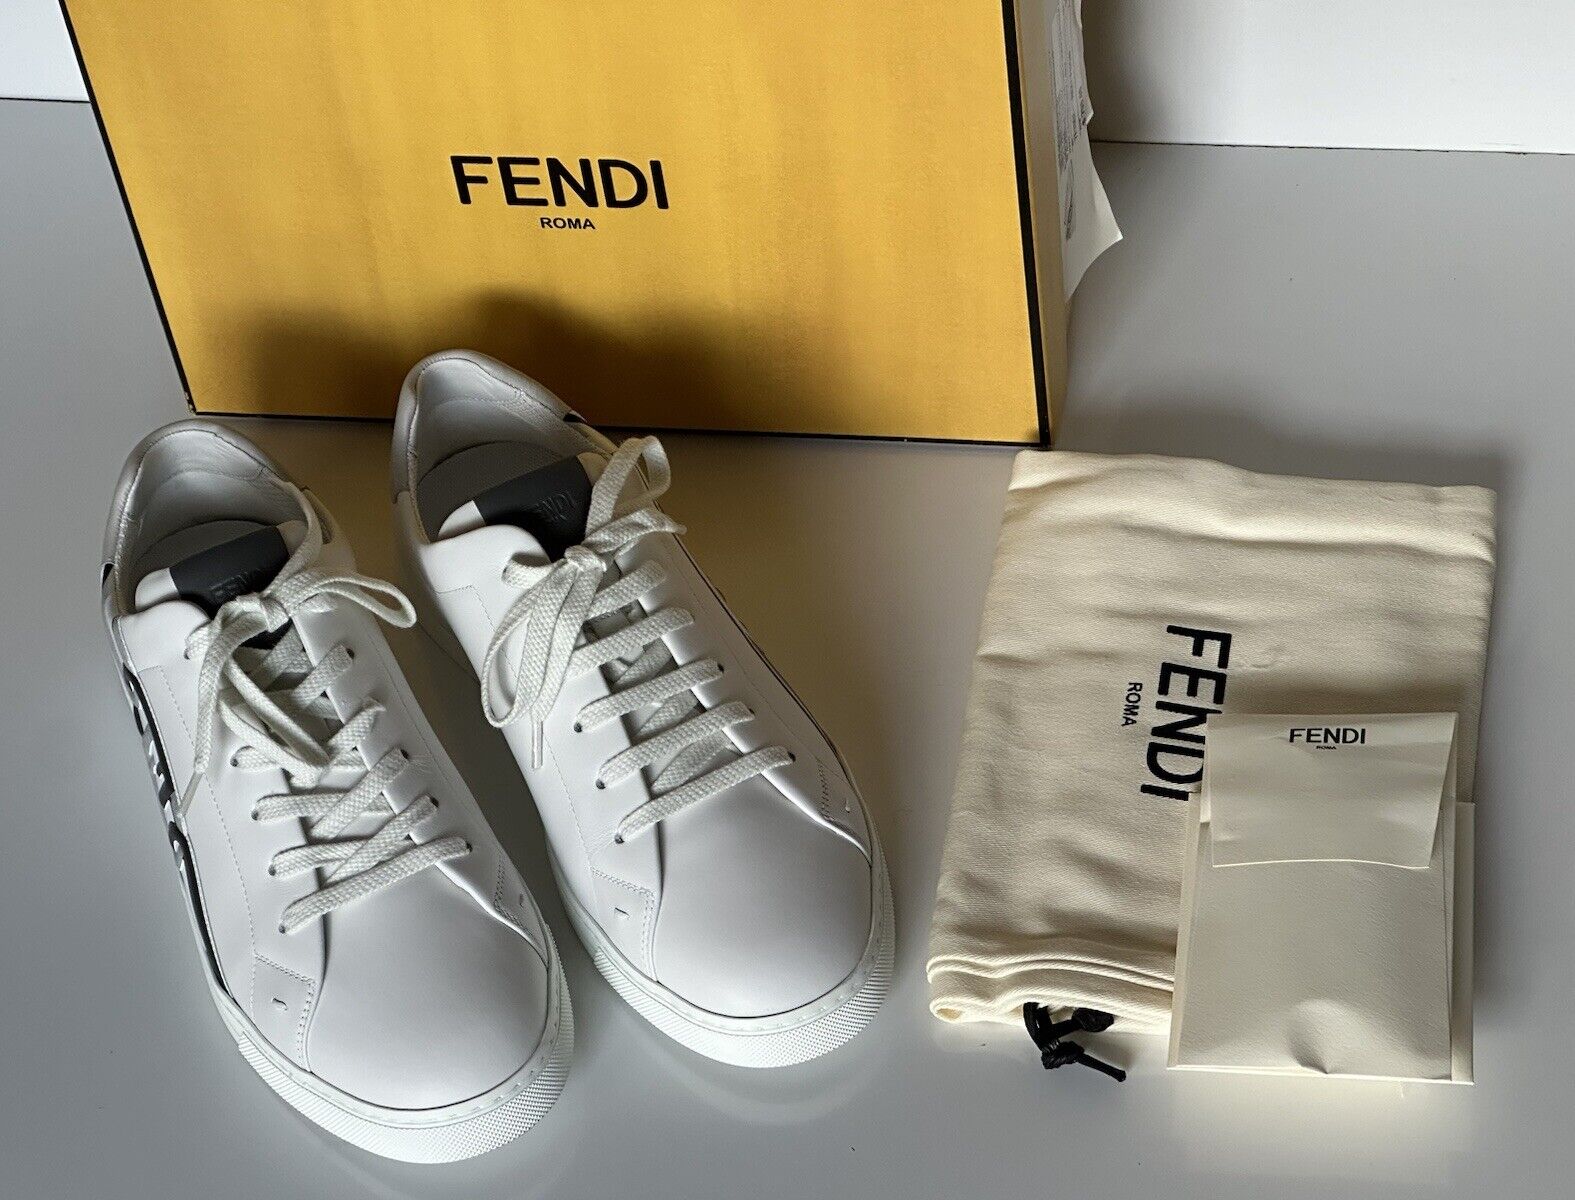 NIB $795 Fendi O’lock Leather White Sneakers 11 US (44 Euro) 7E1562 Italy